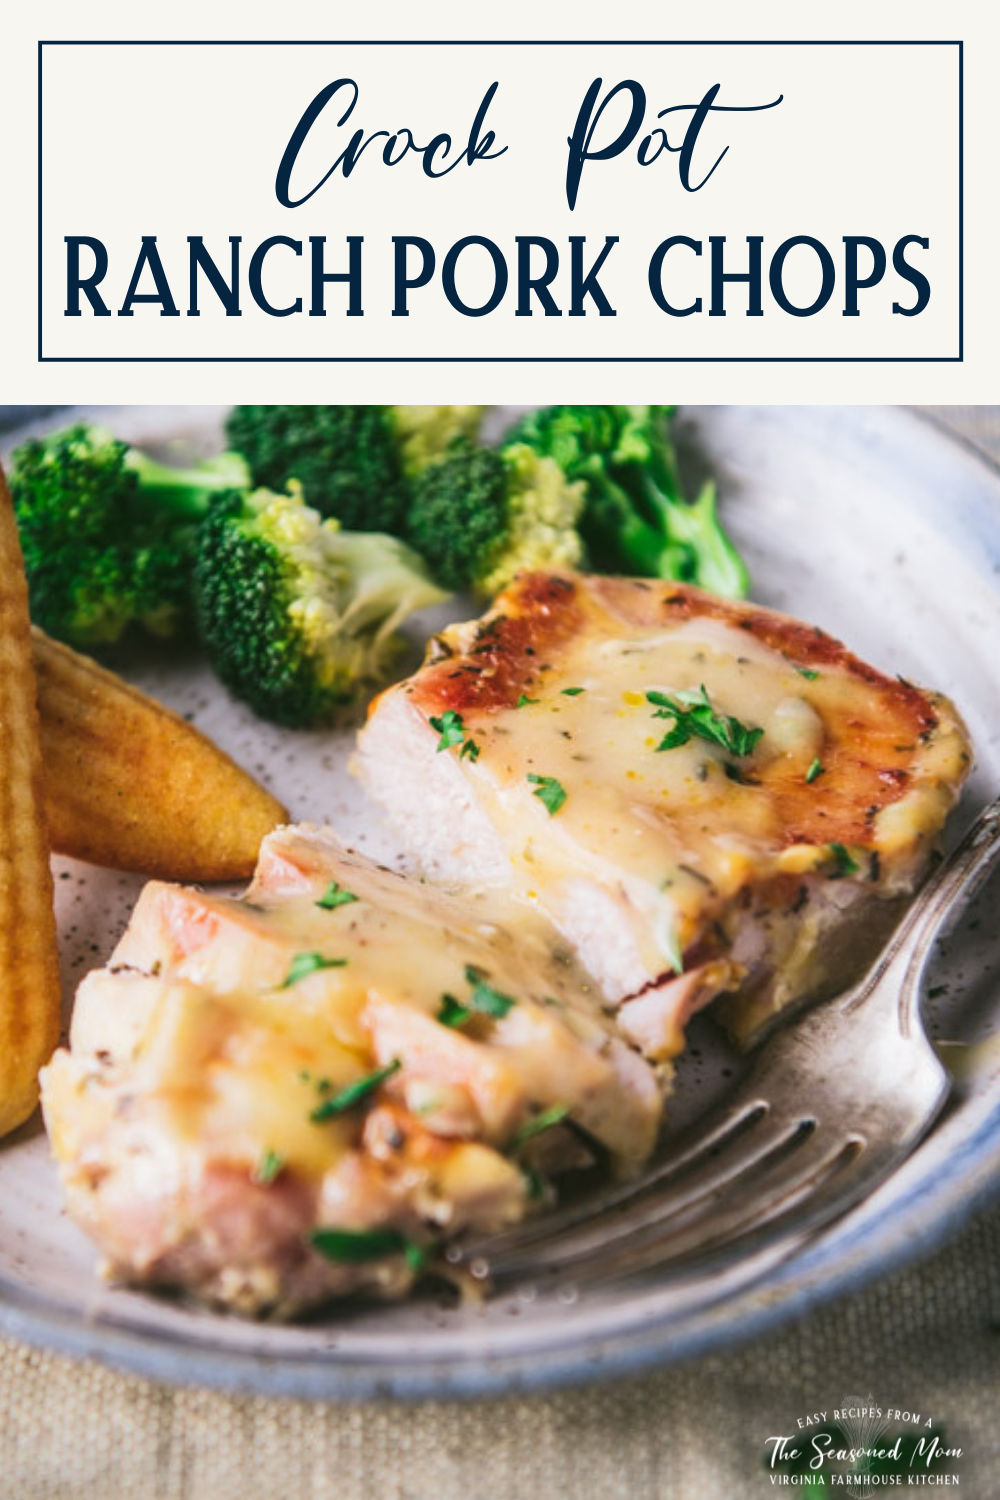 Crock Pot Ranch Pork Chops - The Seasoned Mom